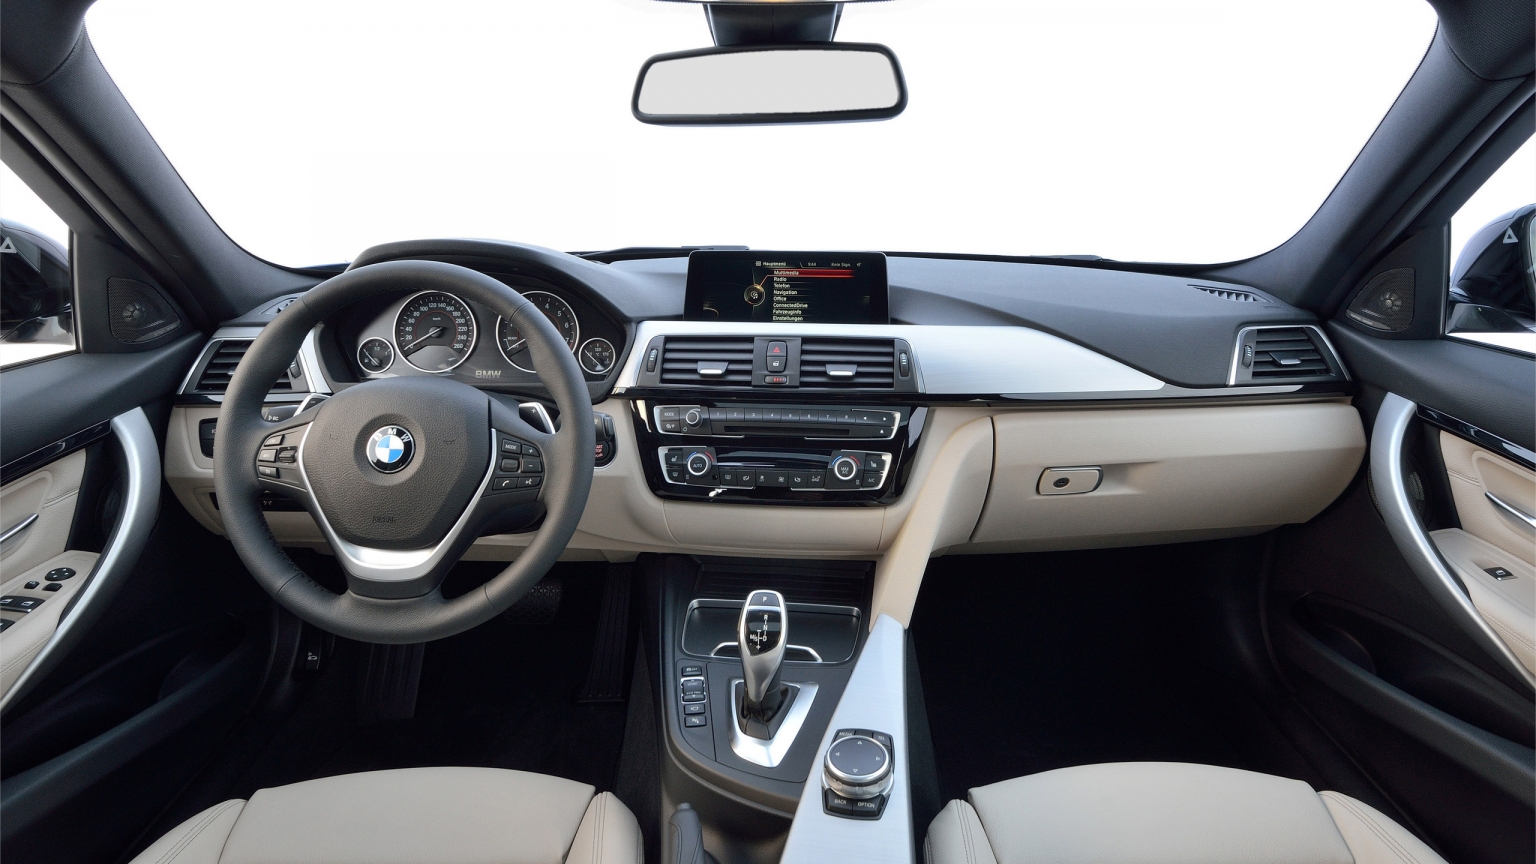 2016 BMW 3 Series Interior for 1536 x 864 HDTV resolution